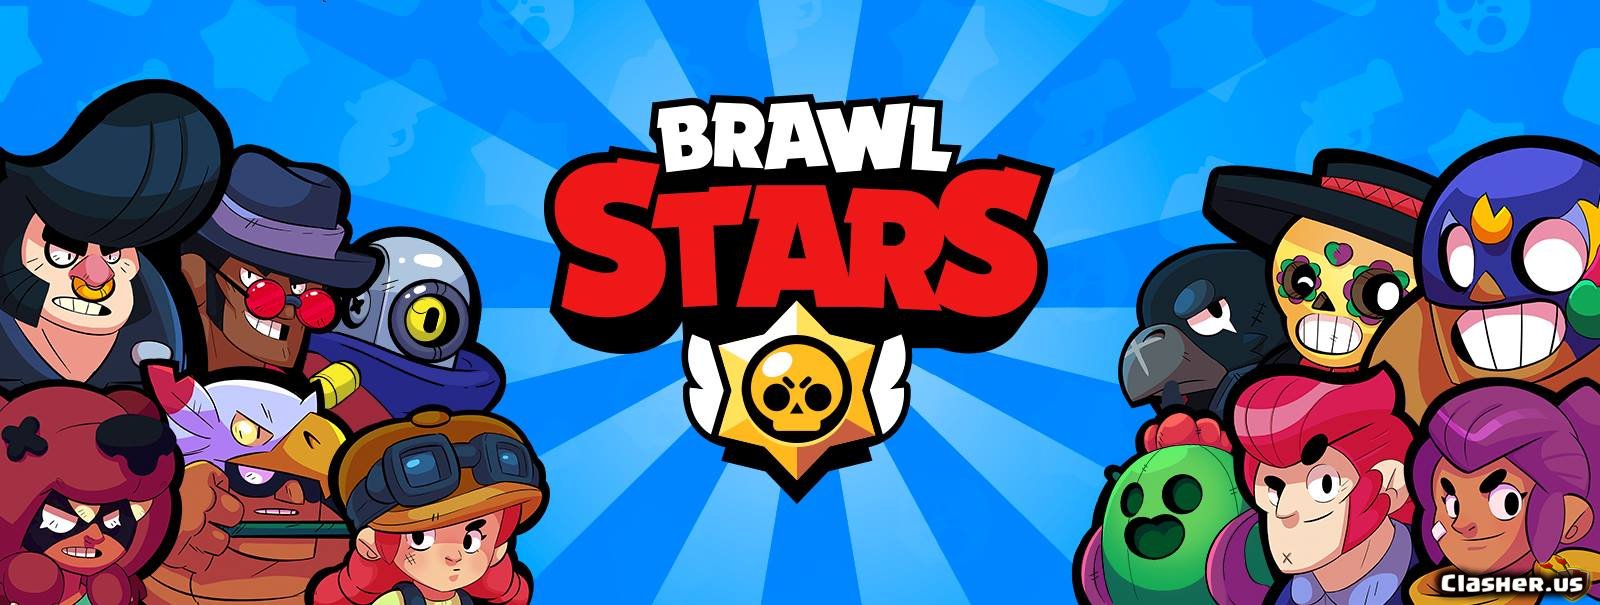 12 Brawlers Brawl Stars Screenshot Background Brawl Stars Wallpapers Clasher Us - animated brawl stars background